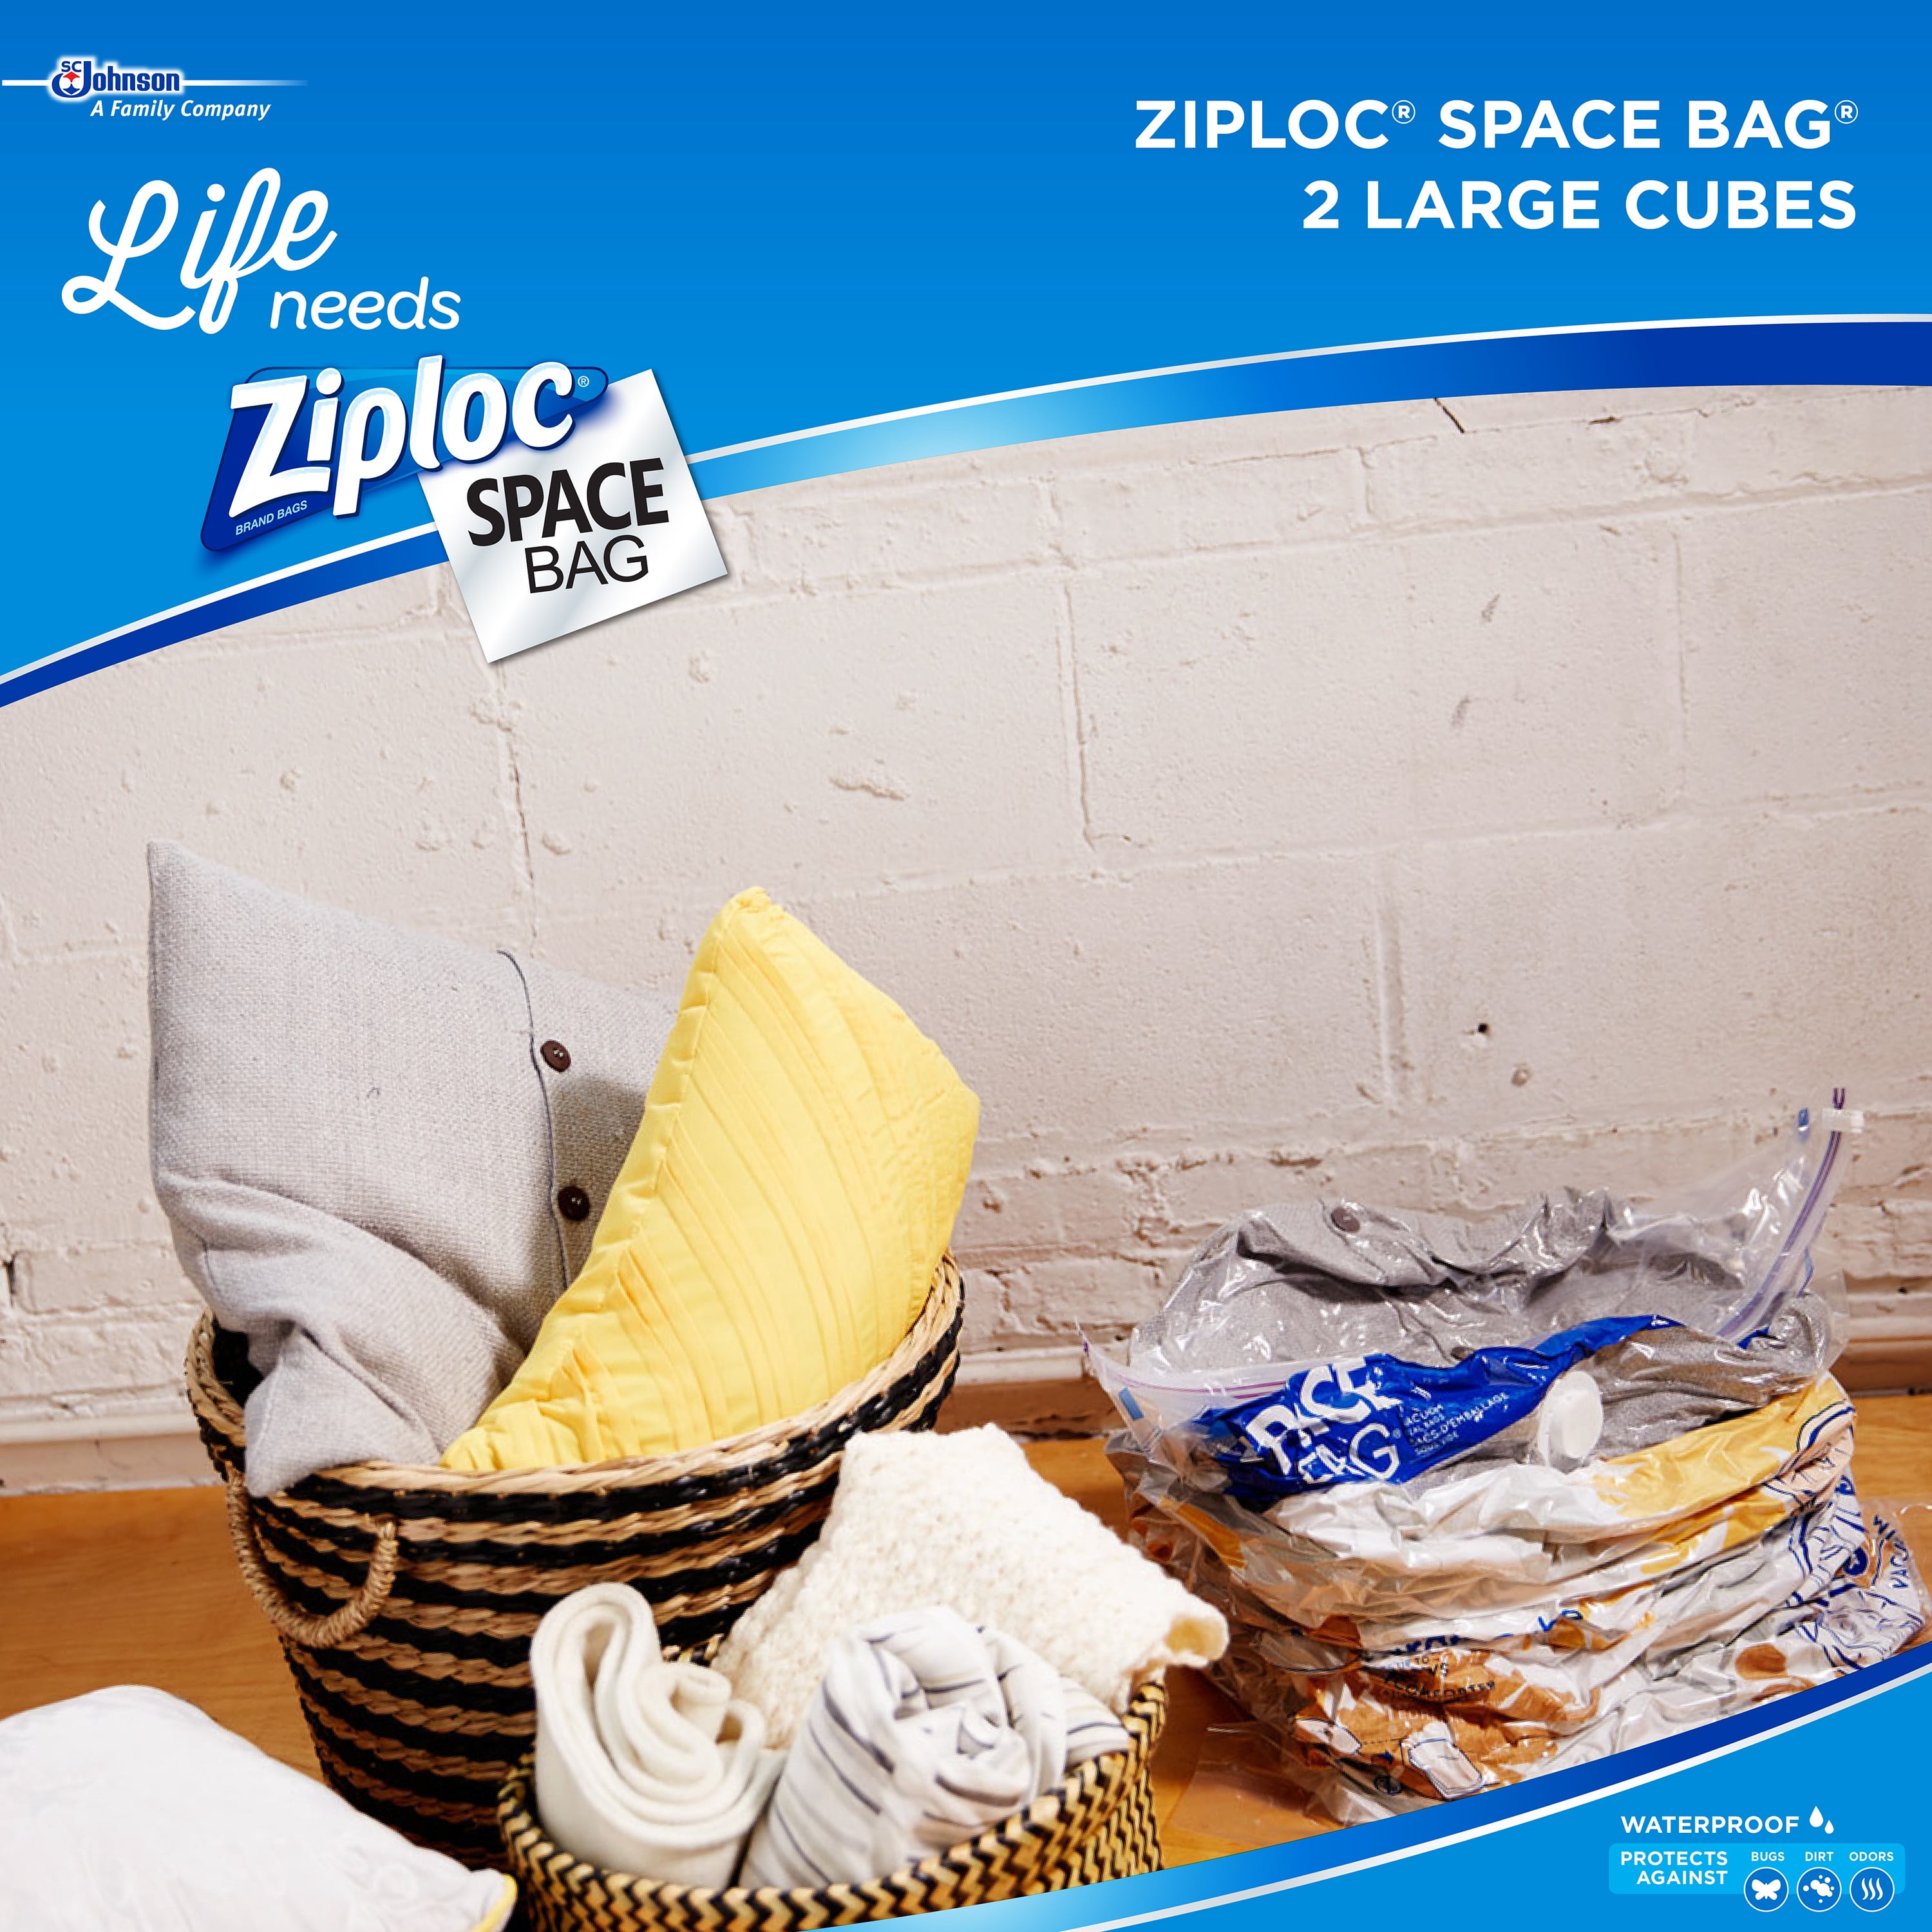 Ziploc Big Bags JUMBO Storage Bags XXL Built-in Handles (24x32x7) 2 Boxes  Of 3CT